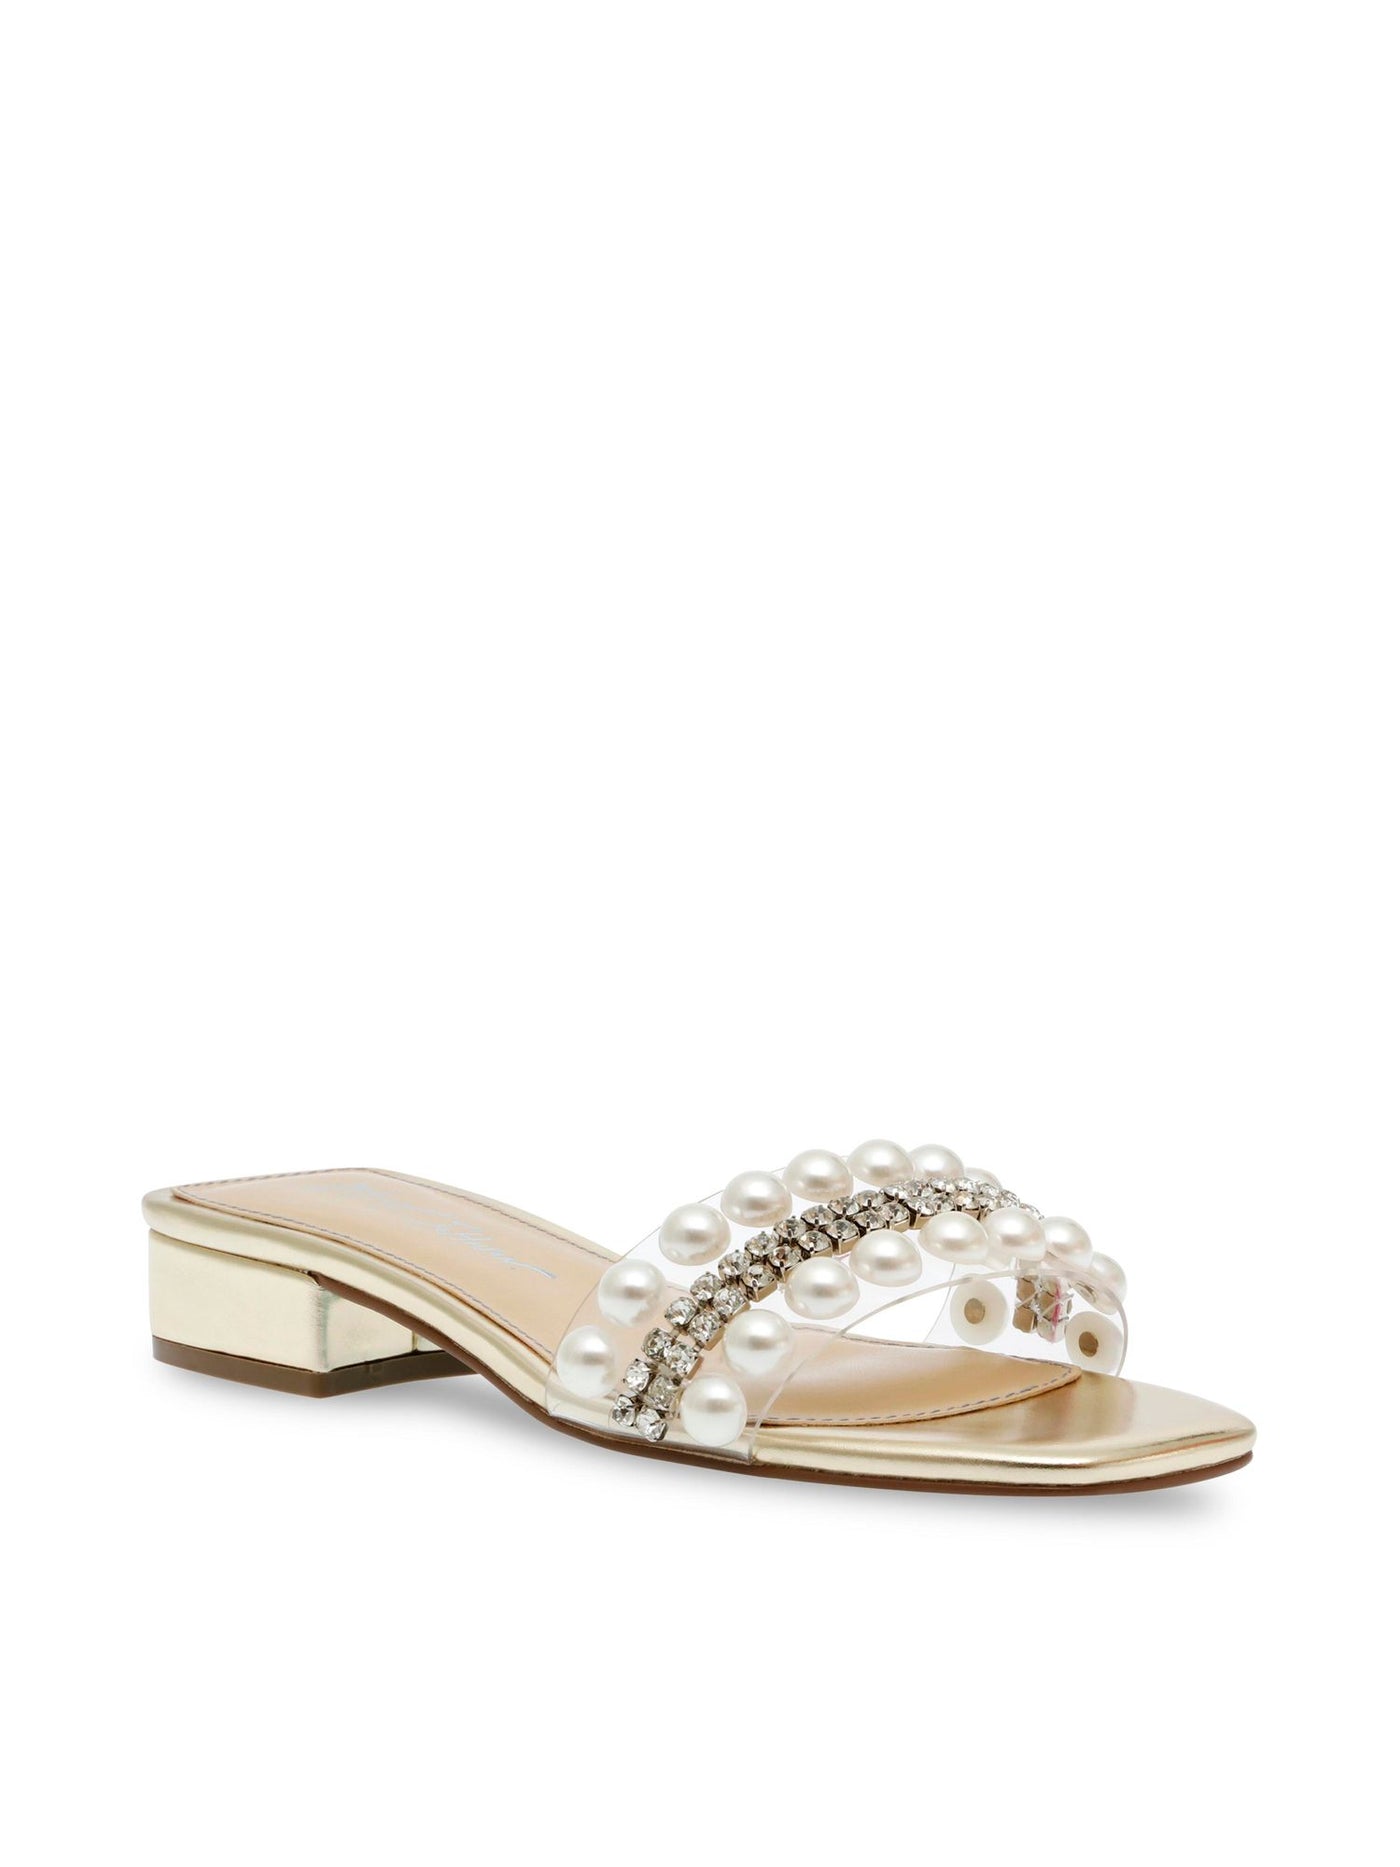 BETSEY JOHNSON Womens Gold Embellished Madge Square Toe Block Heel Slip On Dress Slide Sandals Shoes 5 M